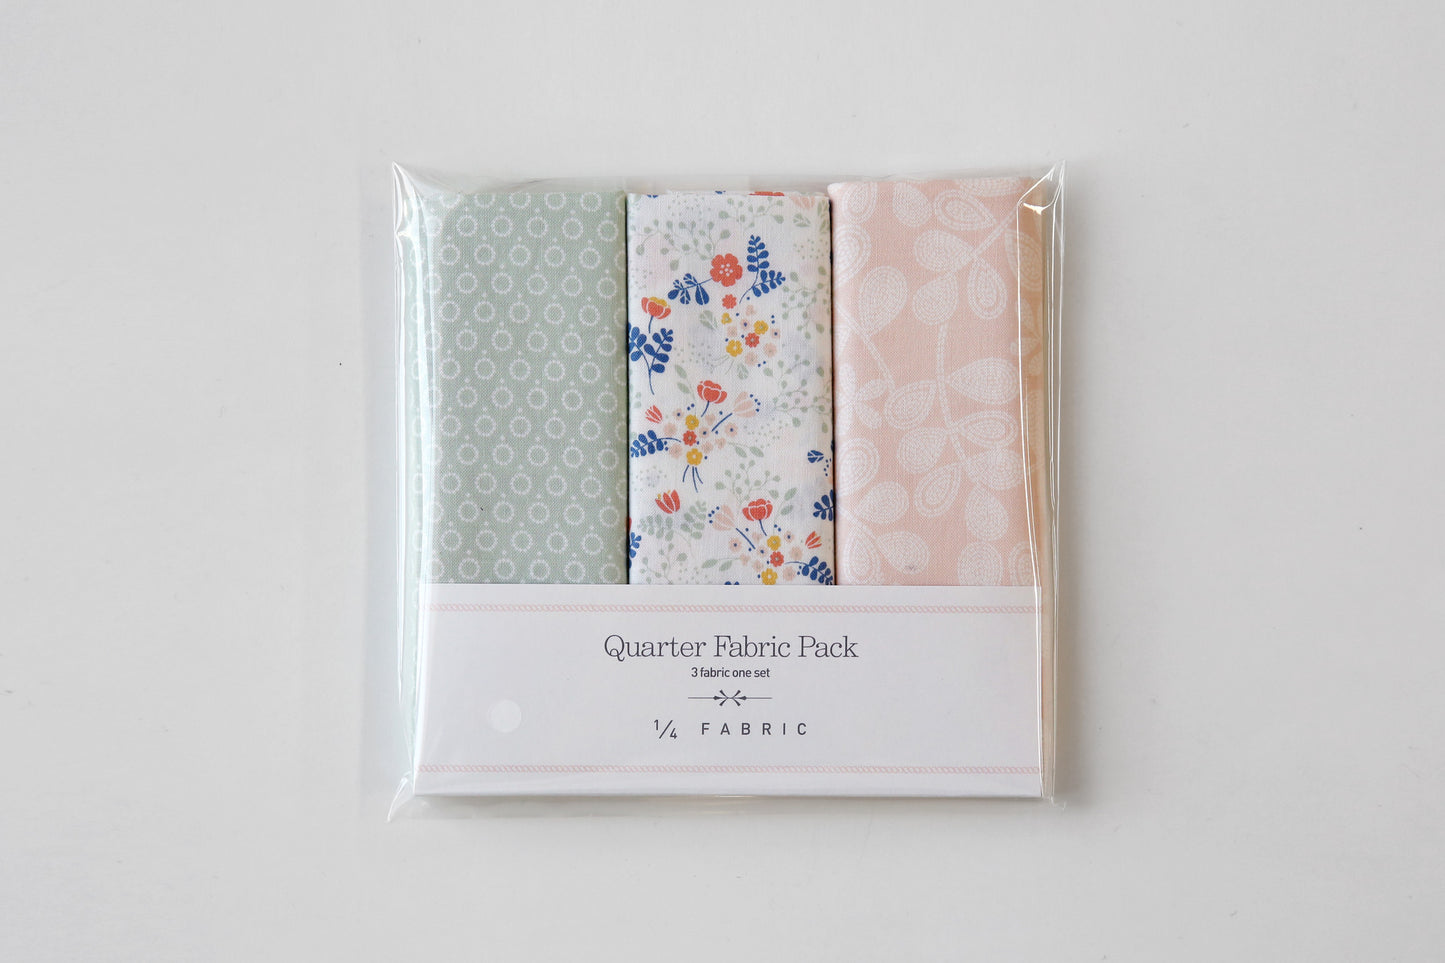 Quarter Fabric Pack - Cotton, Dailylike "Wedding" - KEY Handmade
 - 5